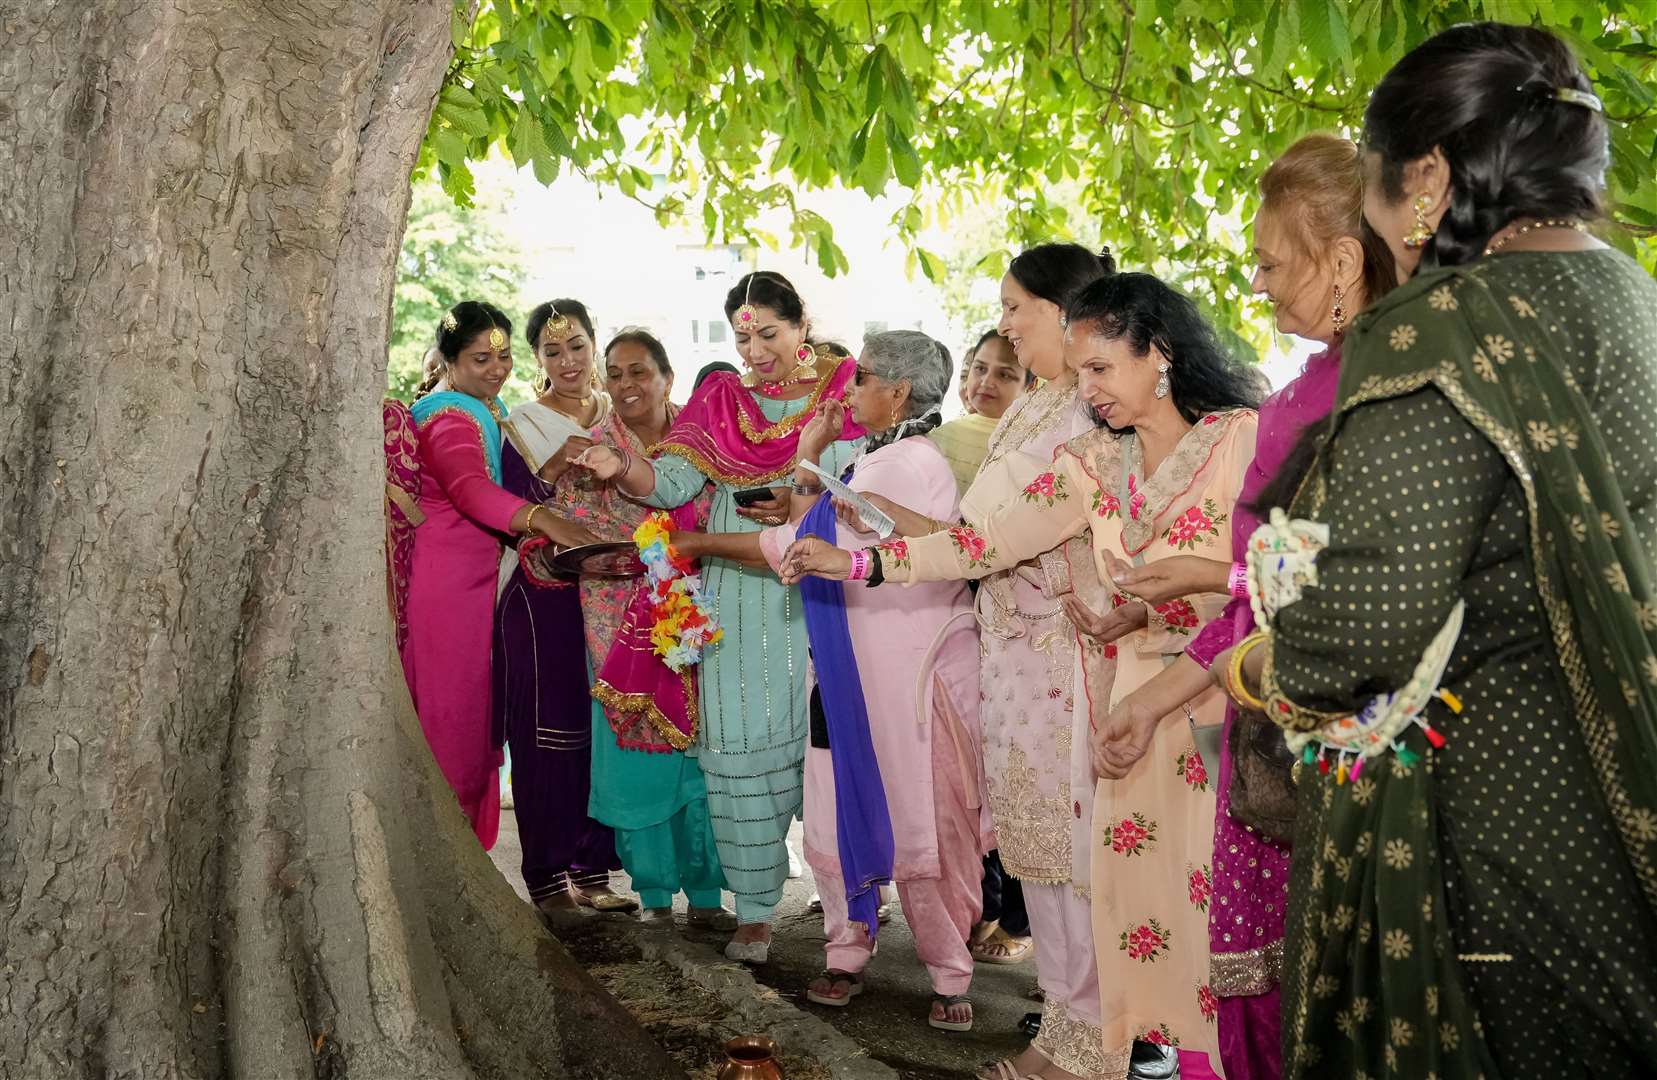 The Punjabi festival brings women together